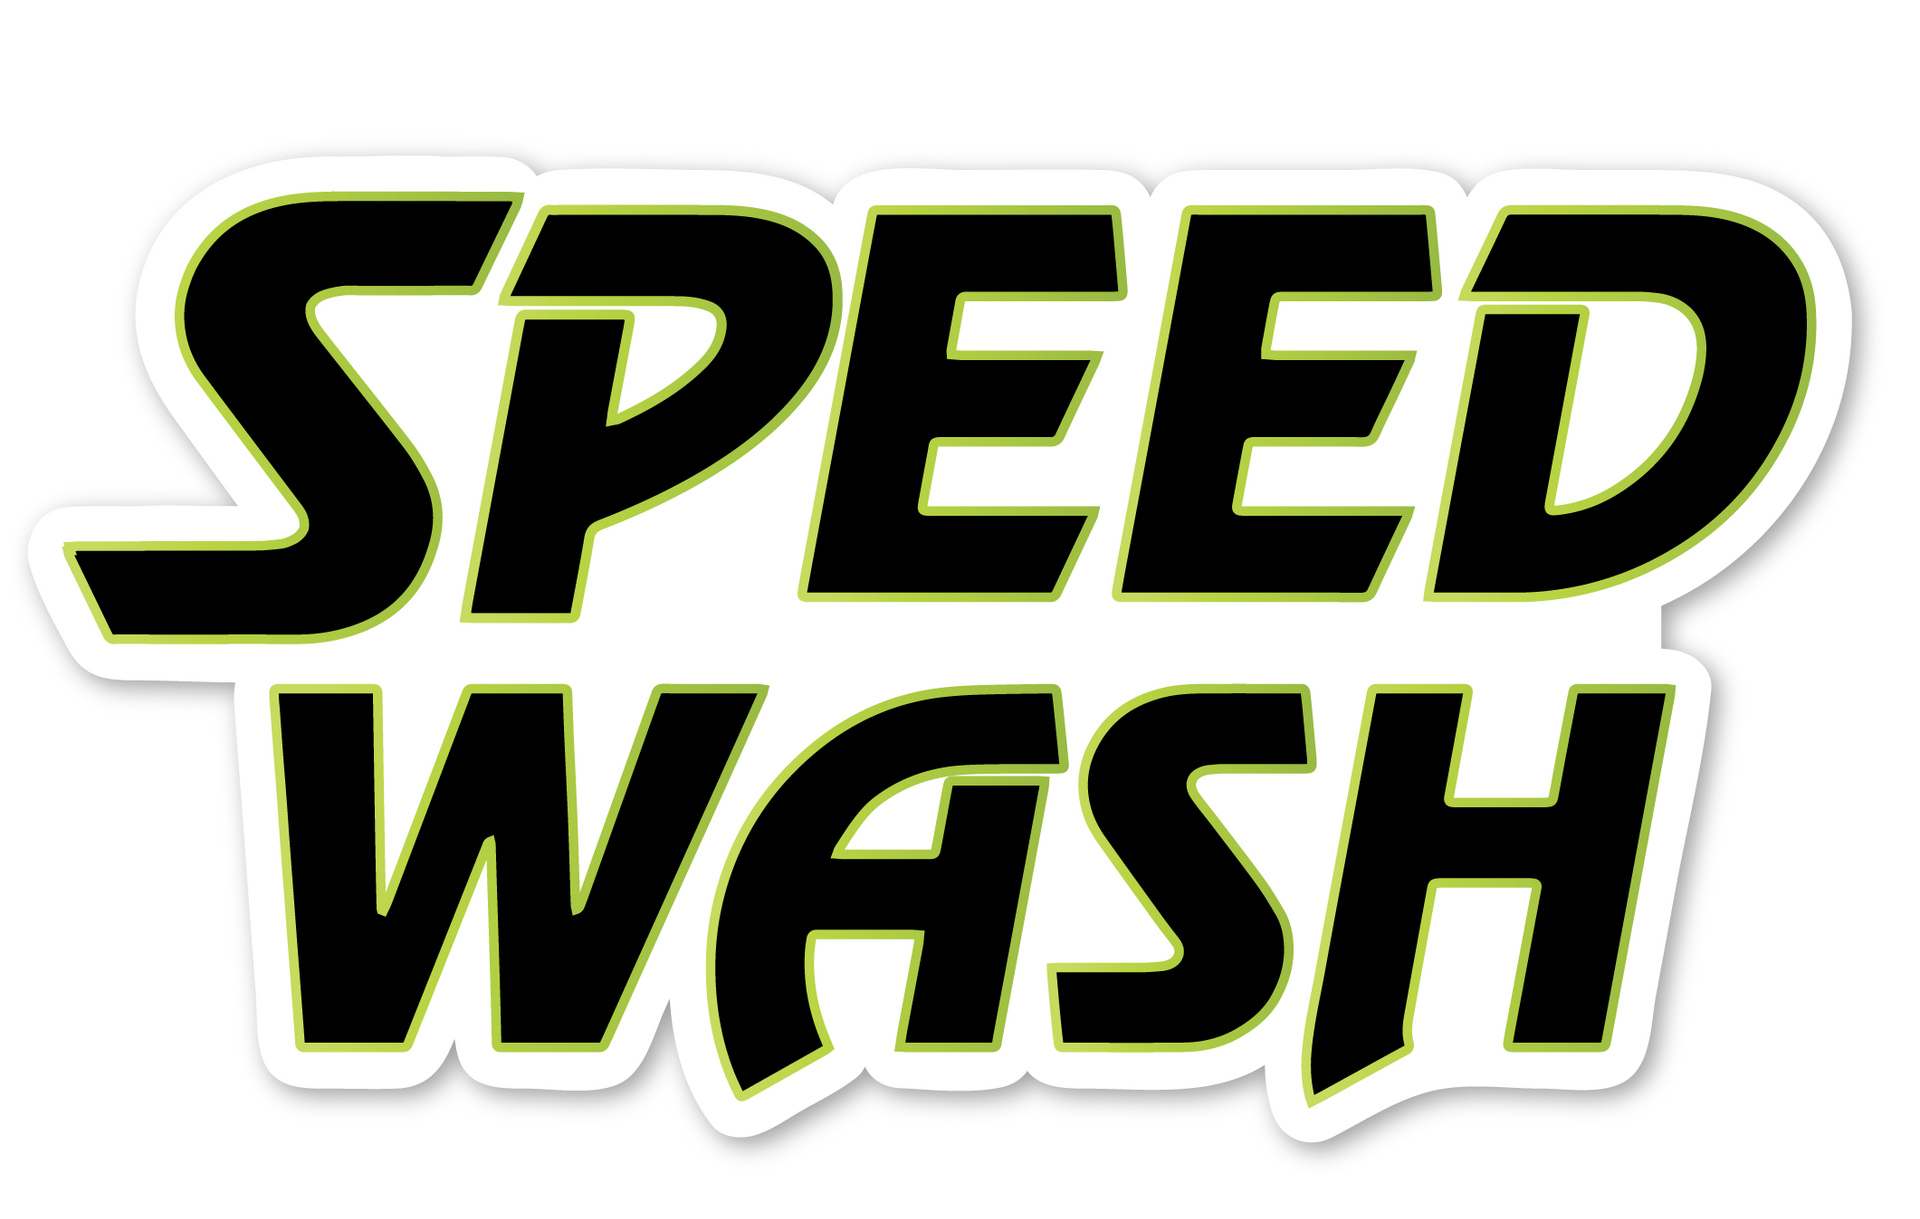 SPEEDWASH - the best car wash in california - cool balck and green logo